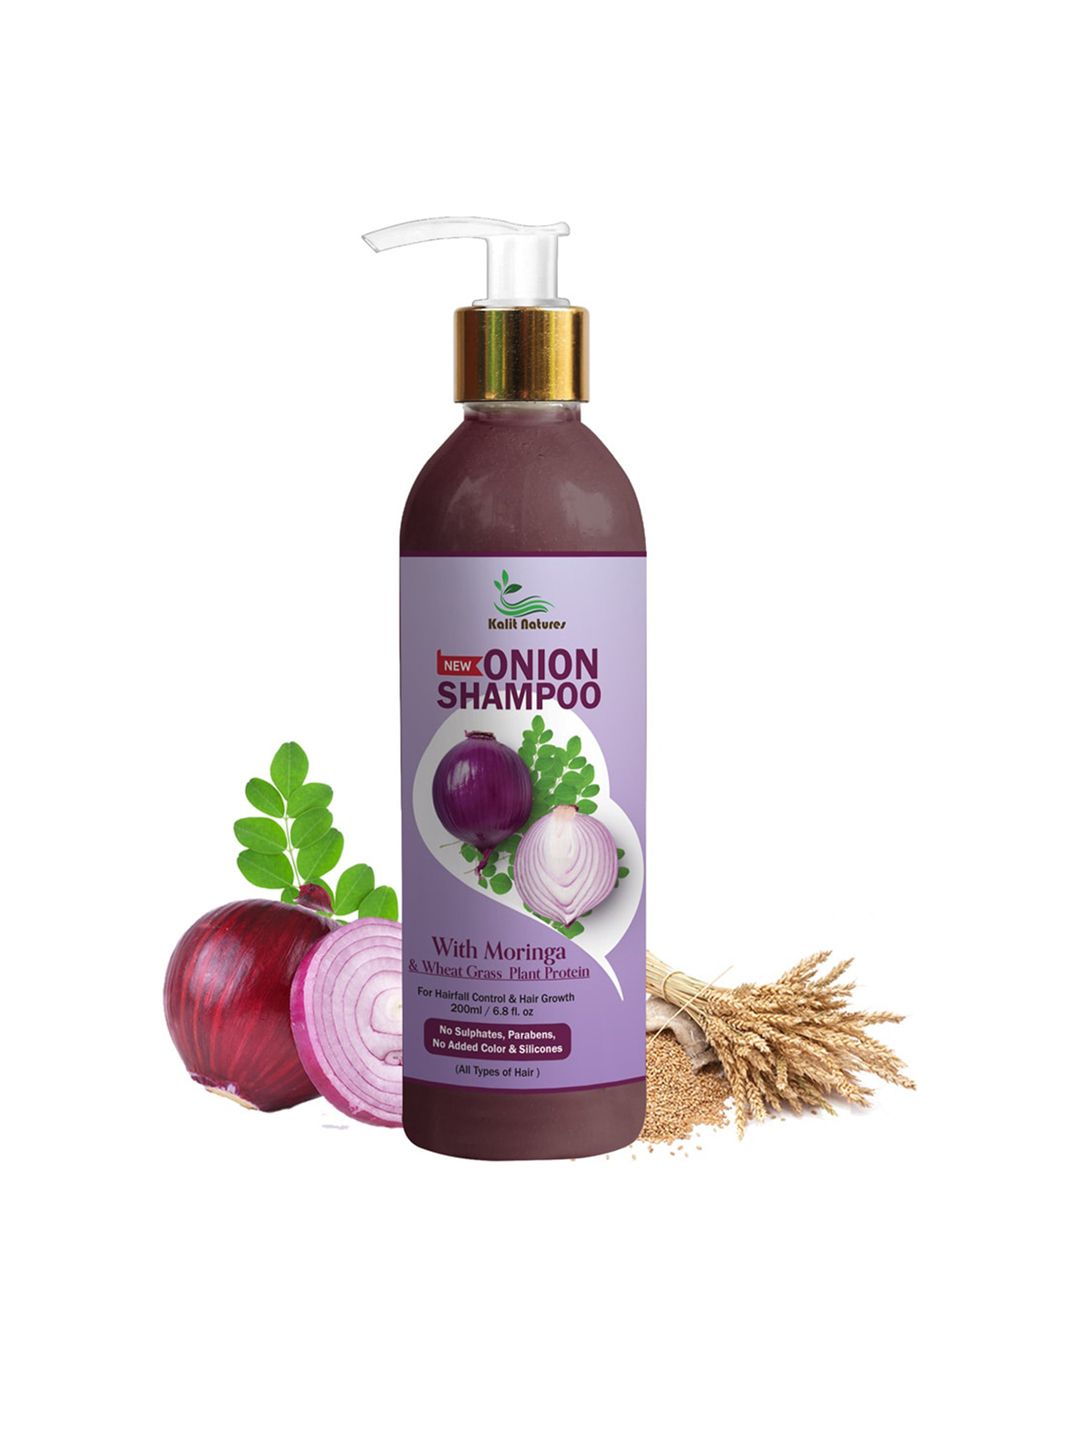 Kalit Natures Onion Shampoo with Moringa & Wheat Grass Plant Protein - 200ml Price in India